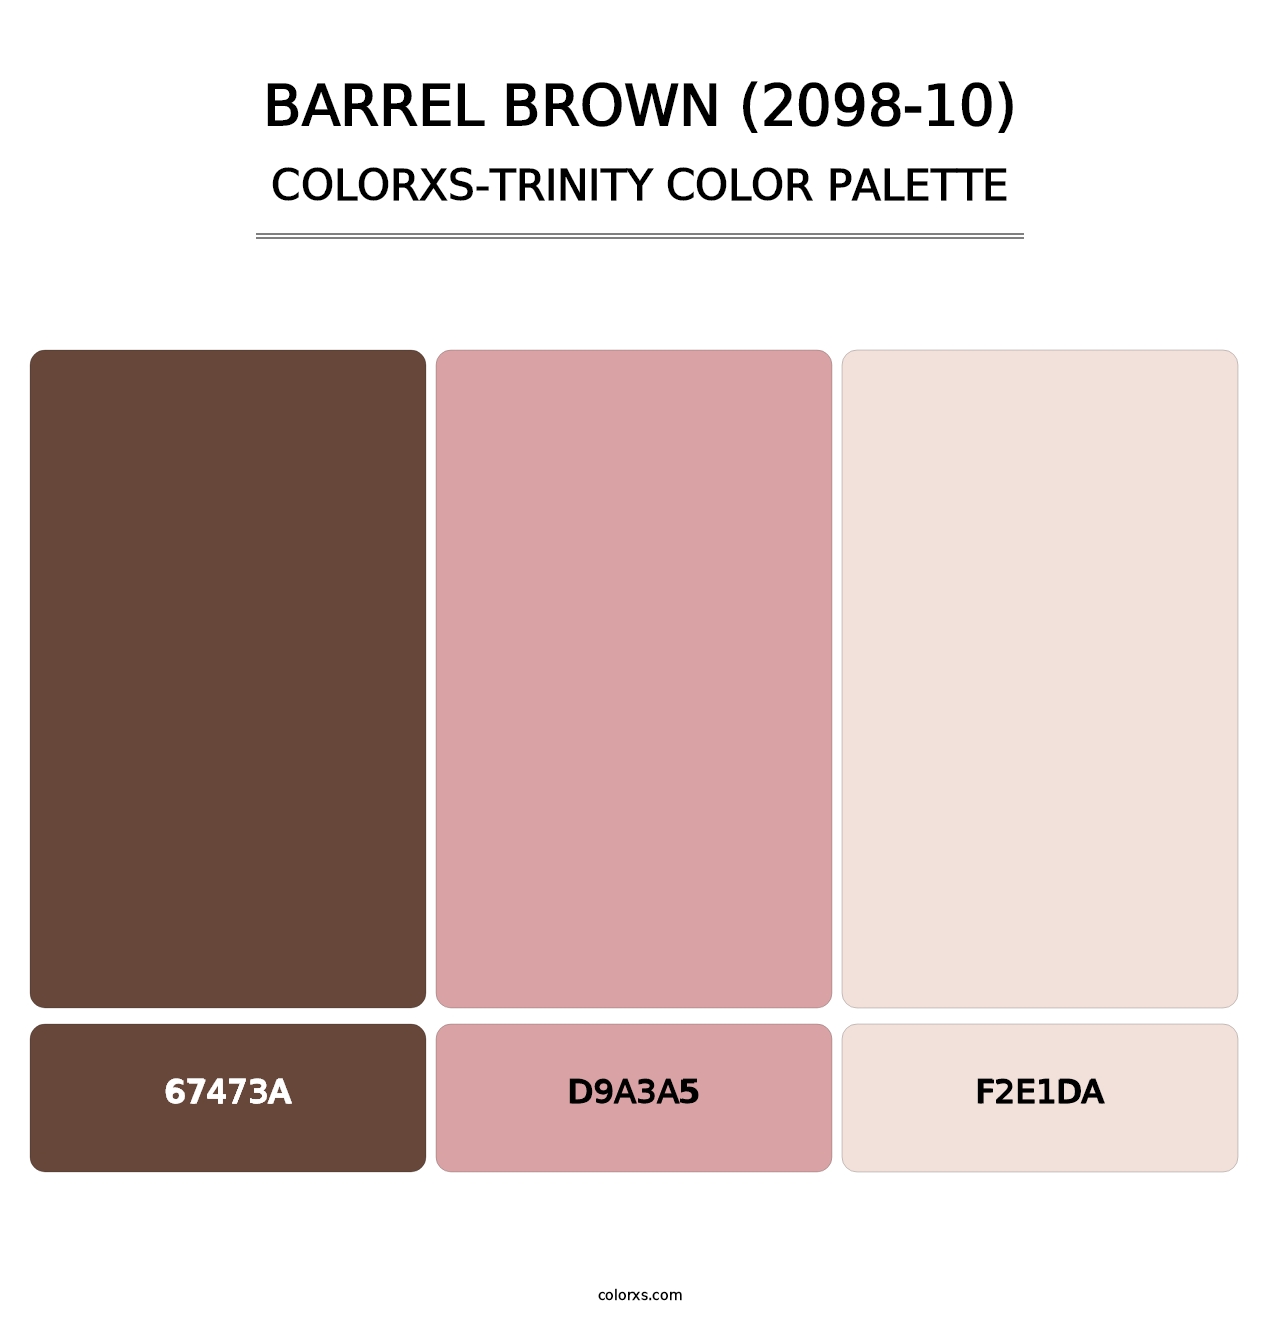 Barrel Brown (2098-10) - Colorxs Trinity Palette